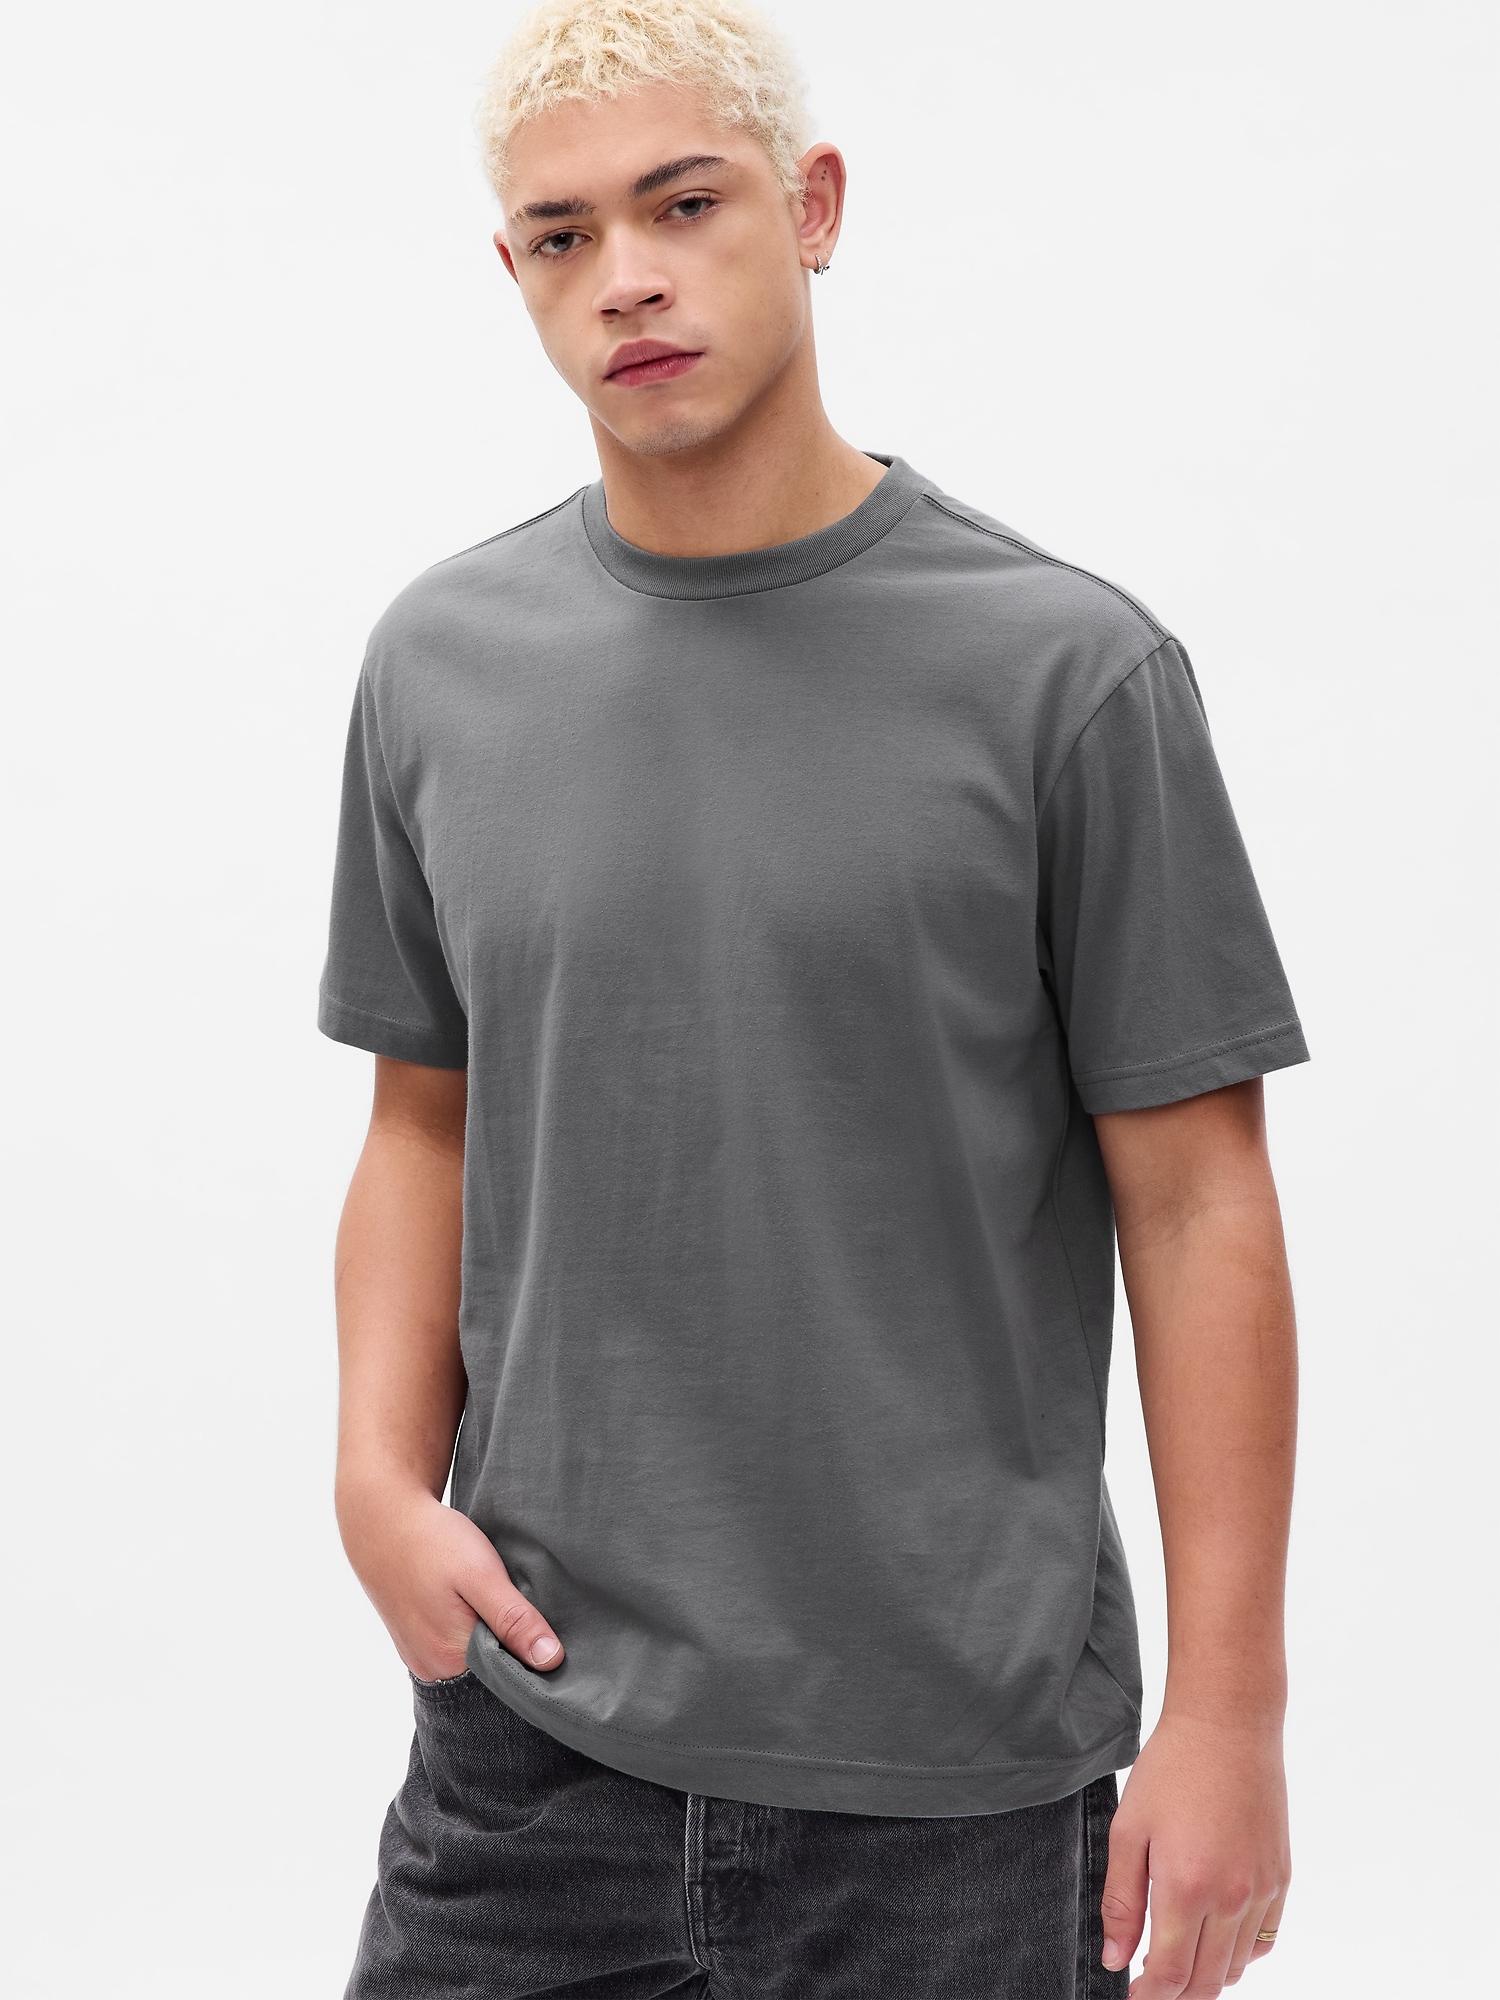 Men's Shirts | Gap